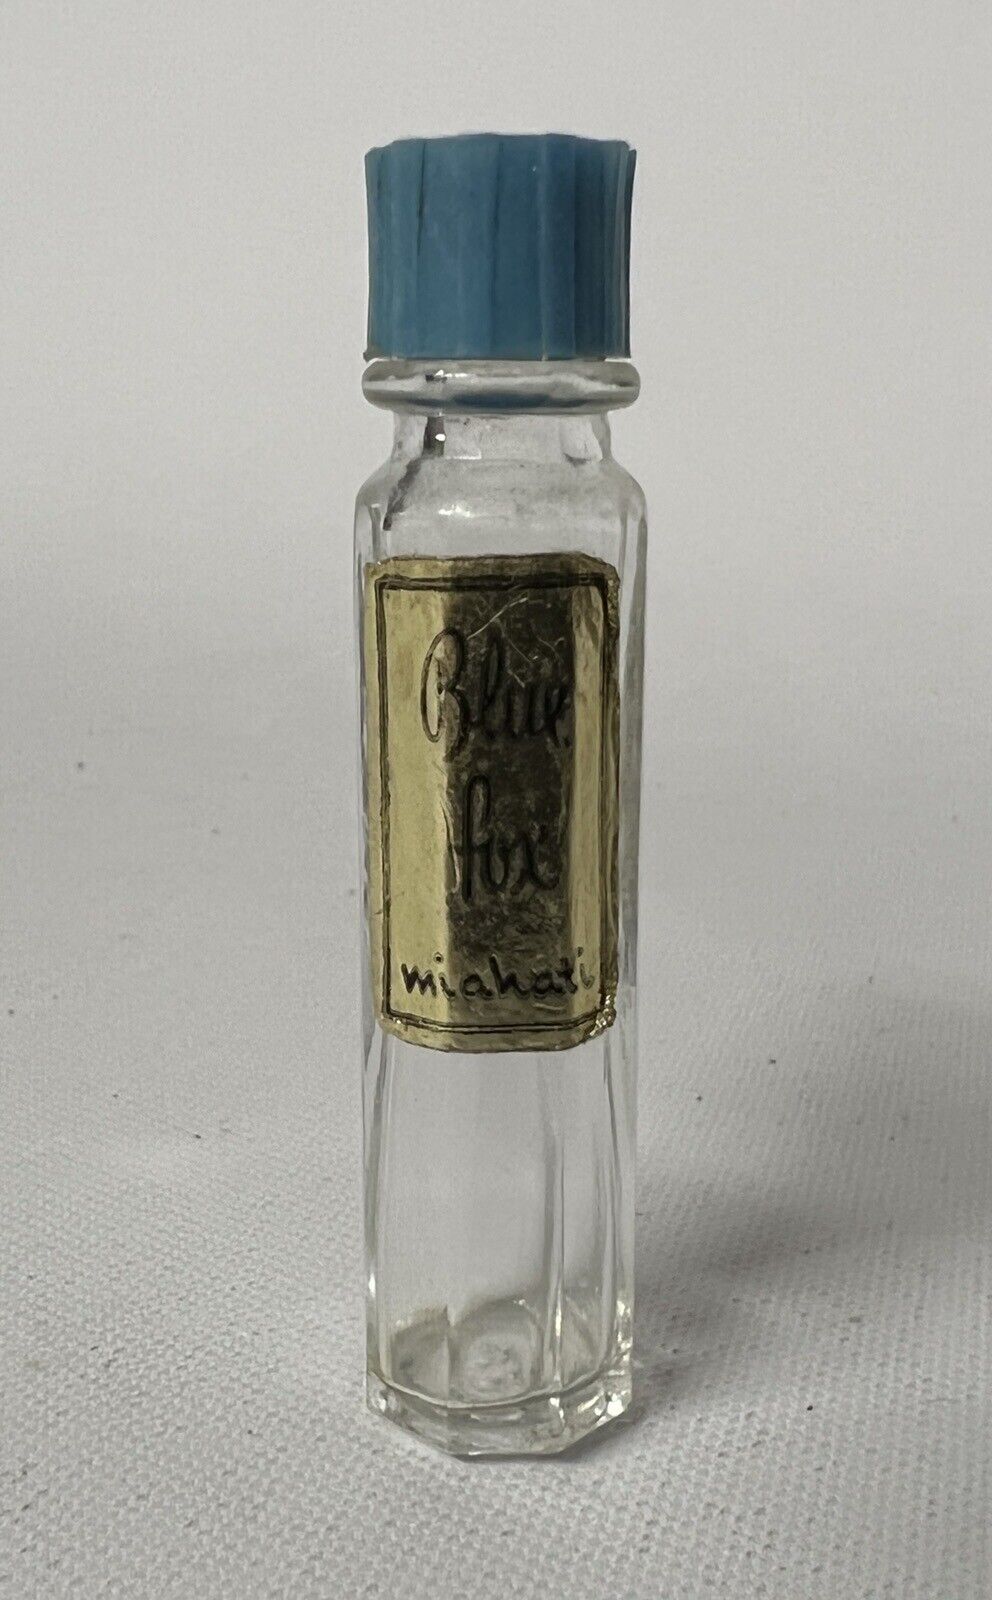 Vintage Blue Fox Perfume by Miahati Miniature Tester Bottle - EMPTY